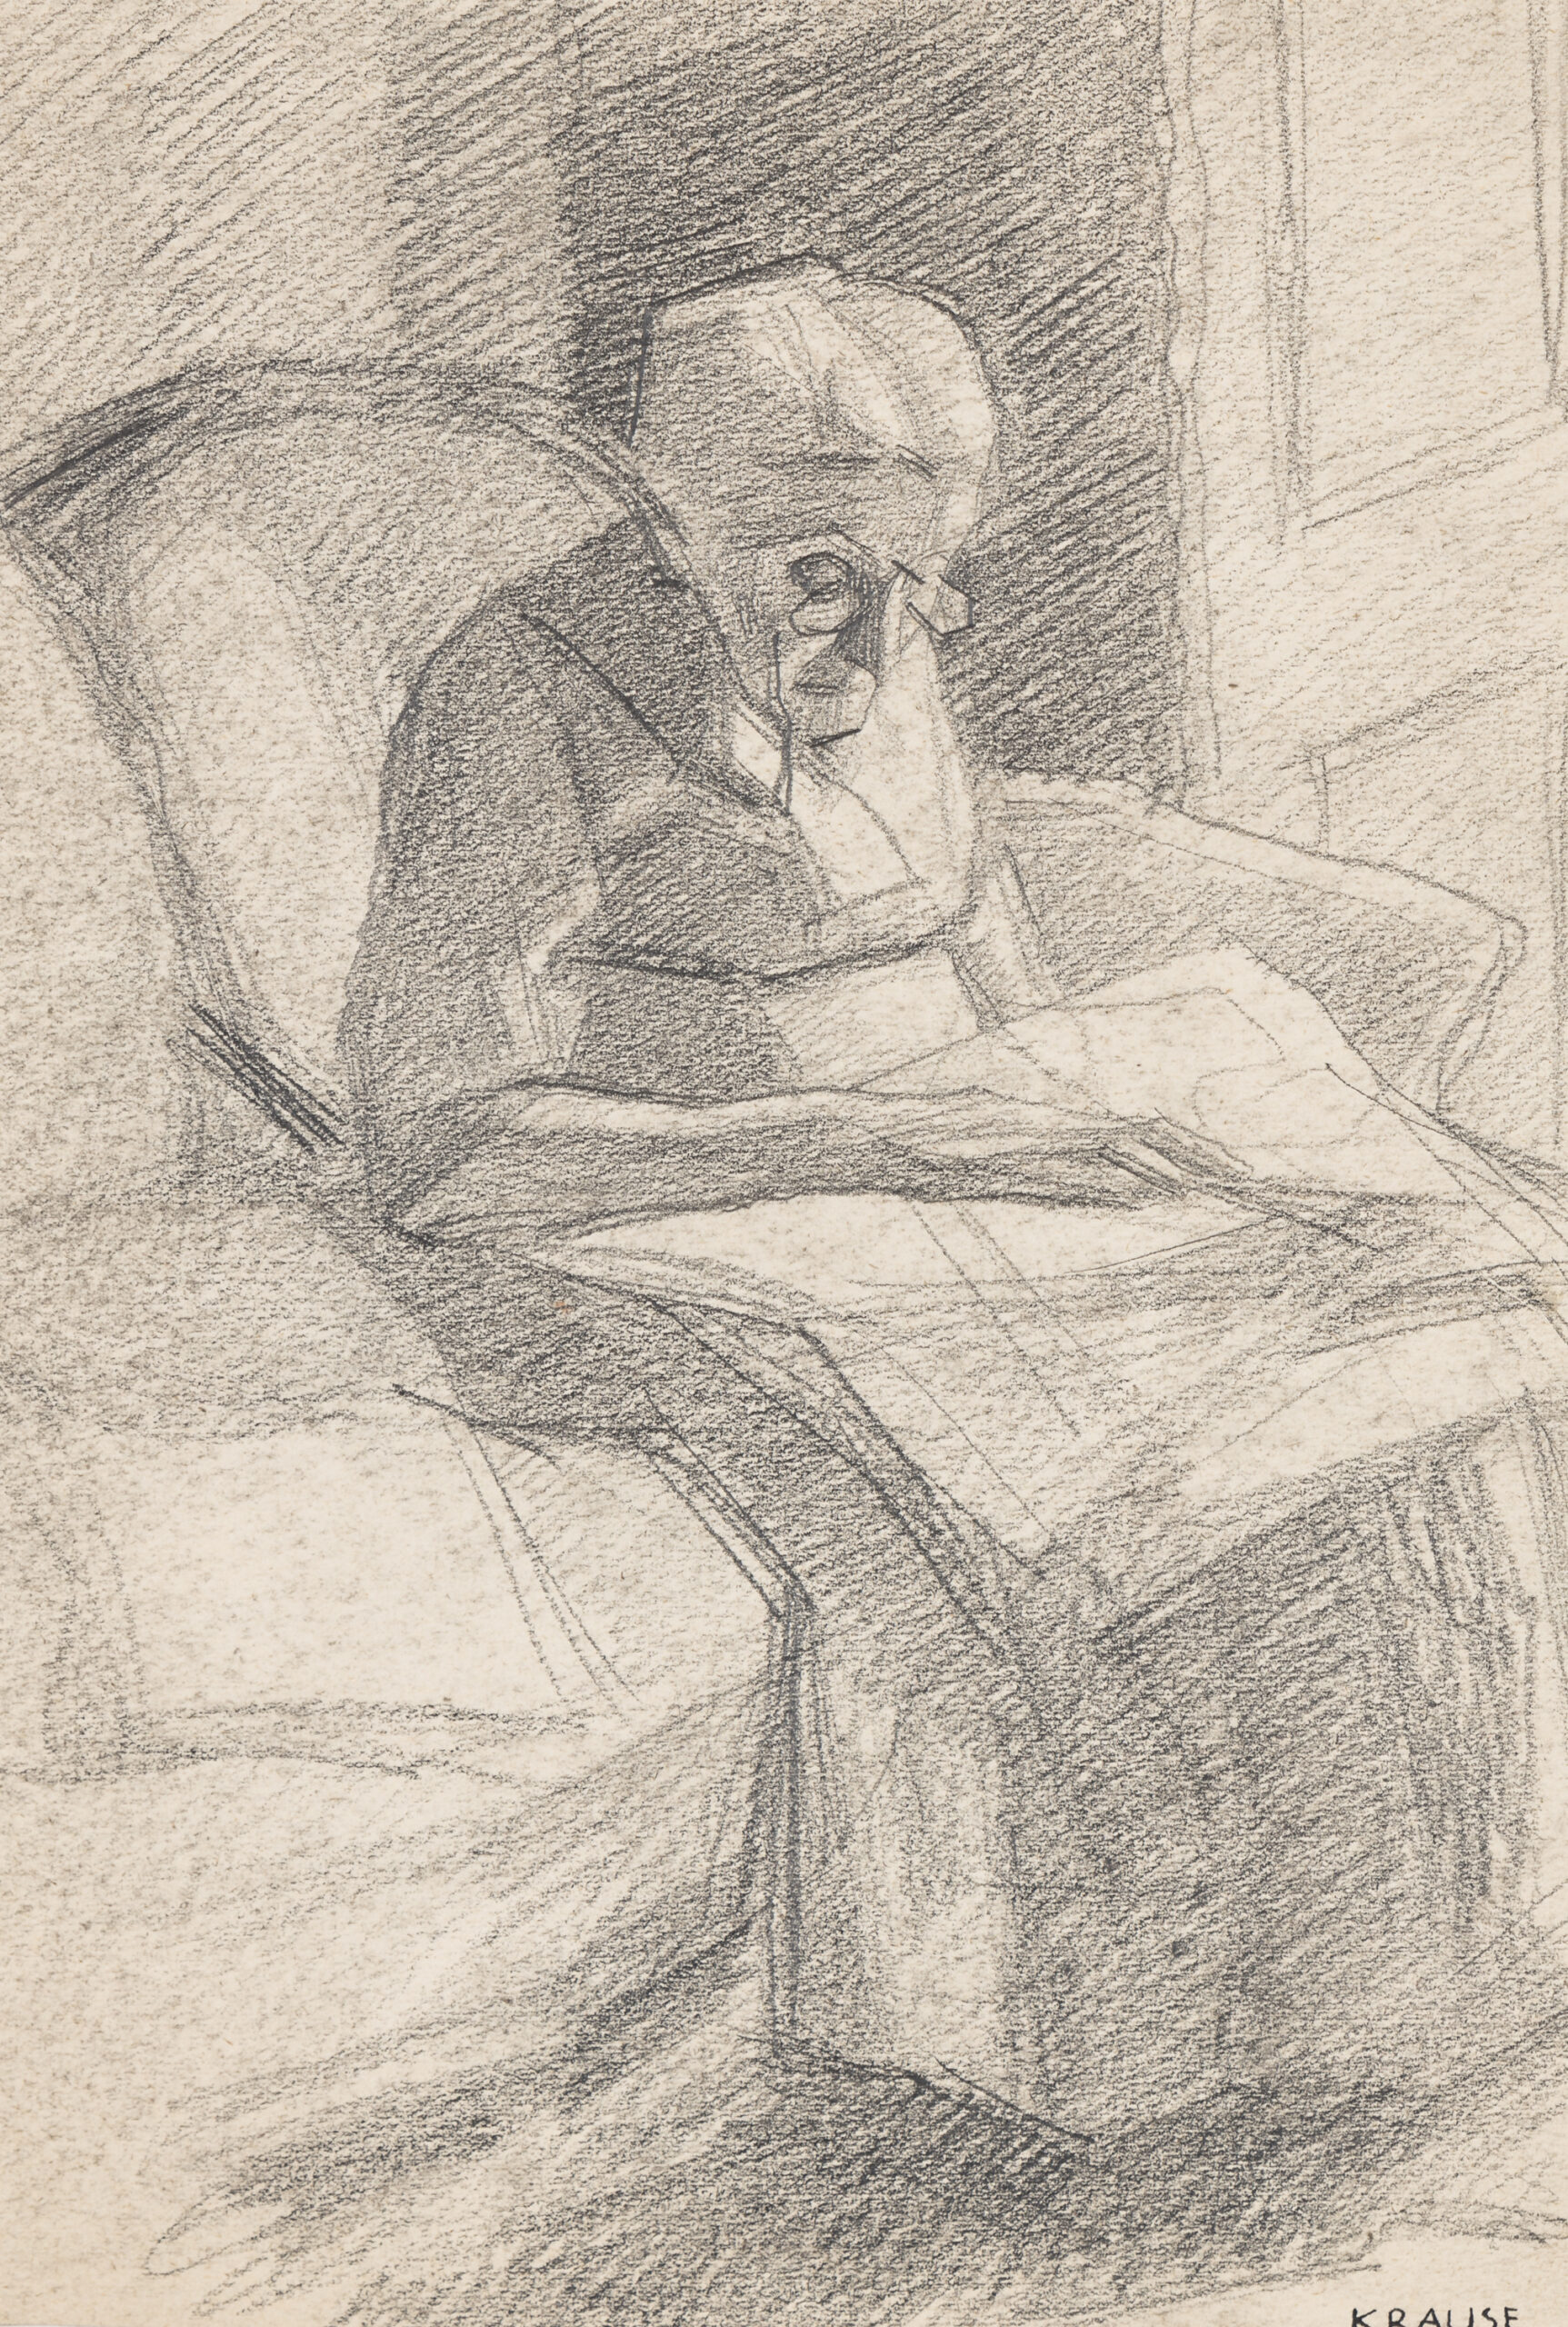 Krause Heinrich-Woman reading newsPaper in armchair